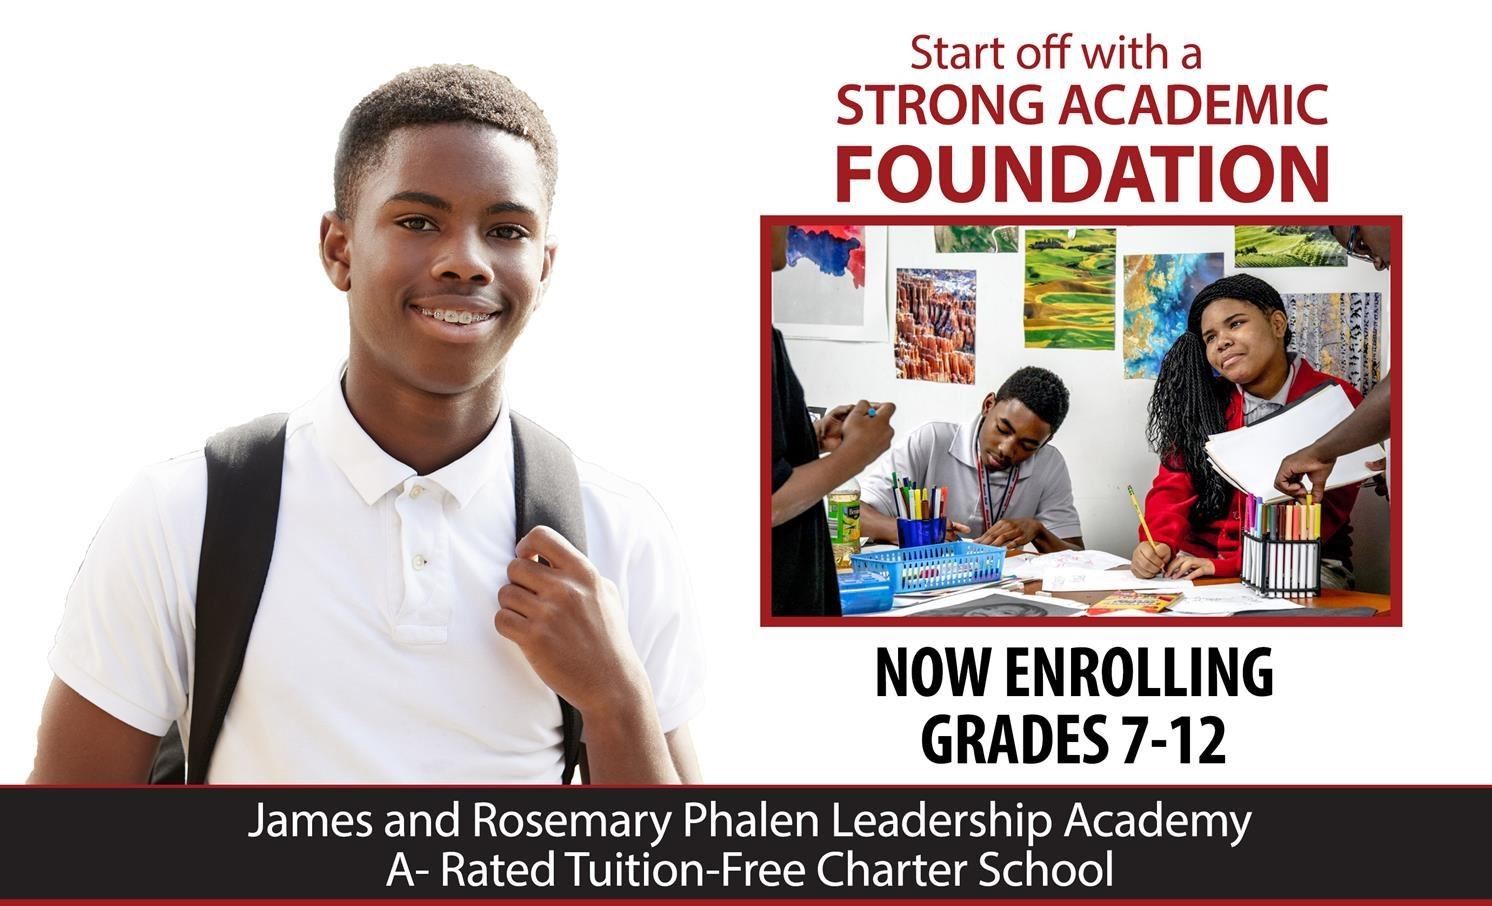 Enrollment at James and Rosemary Phalen Leadership Academy